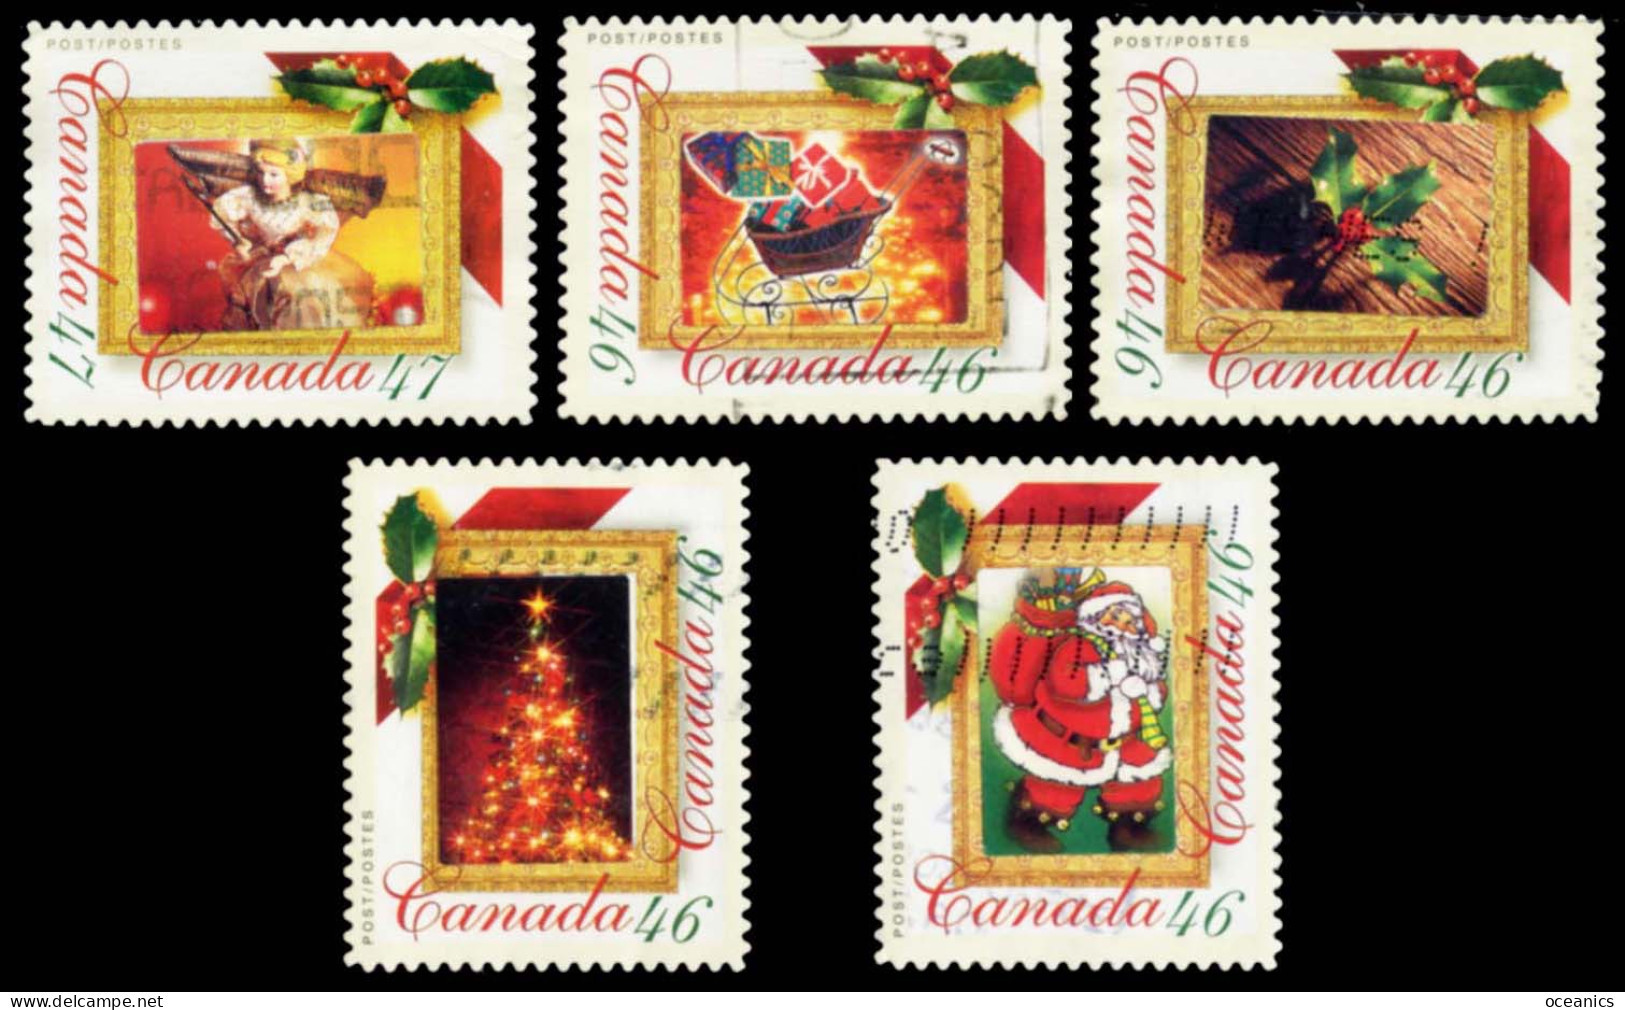 Canada (Scott No.1872 - Timbre Photo / Christmas / Picture Postage) (o) 5 DIFF. - Oblitérés